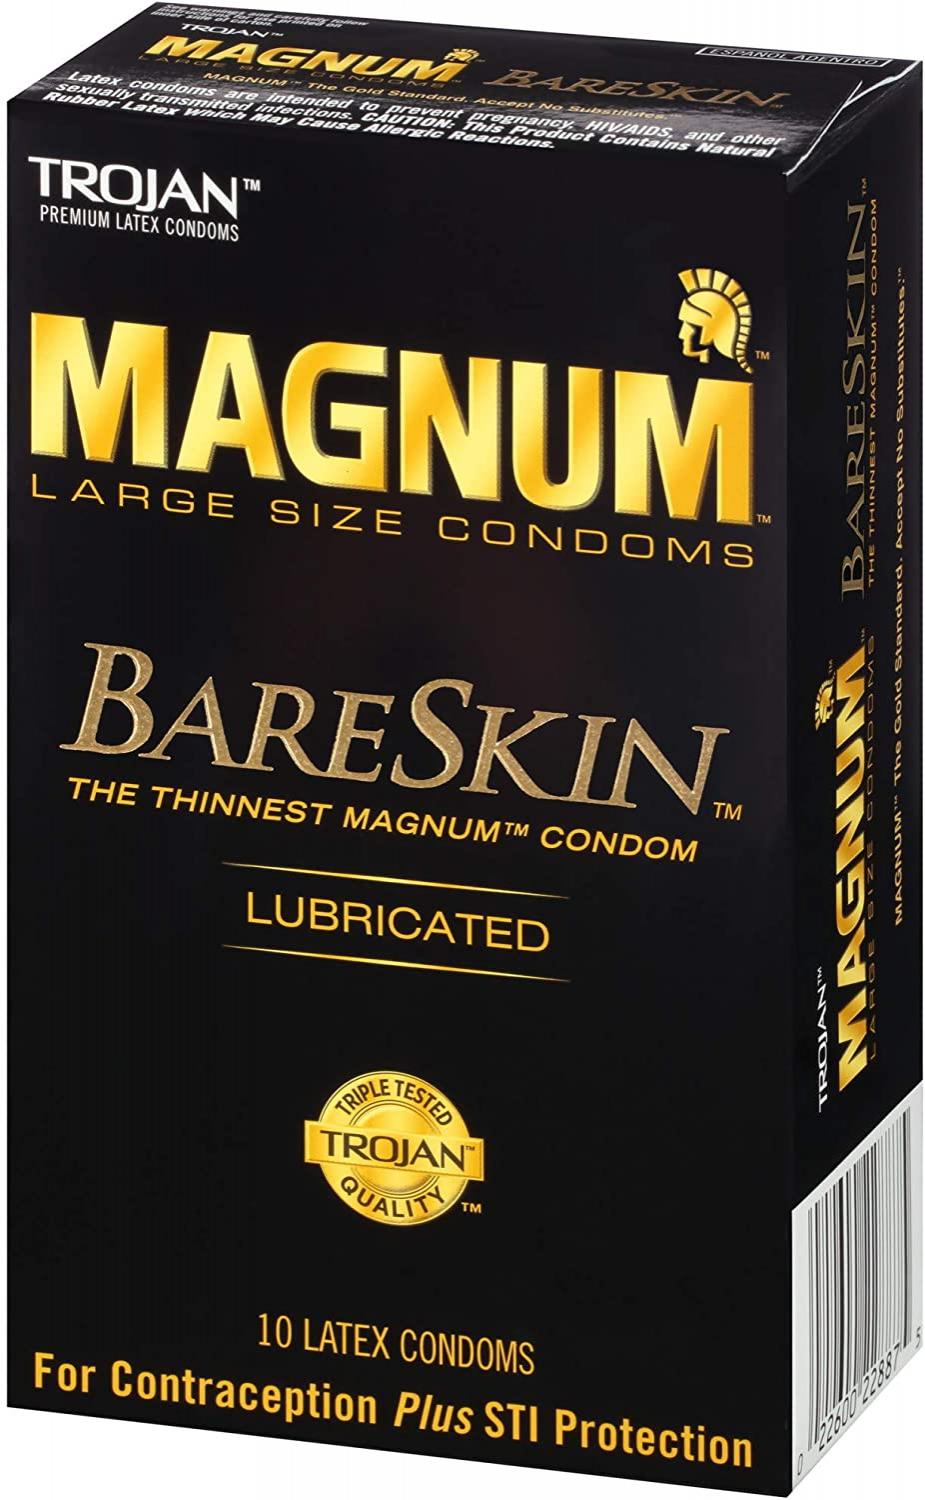 Trojan Magnum Bareskin Lubricated Large Size Condoms